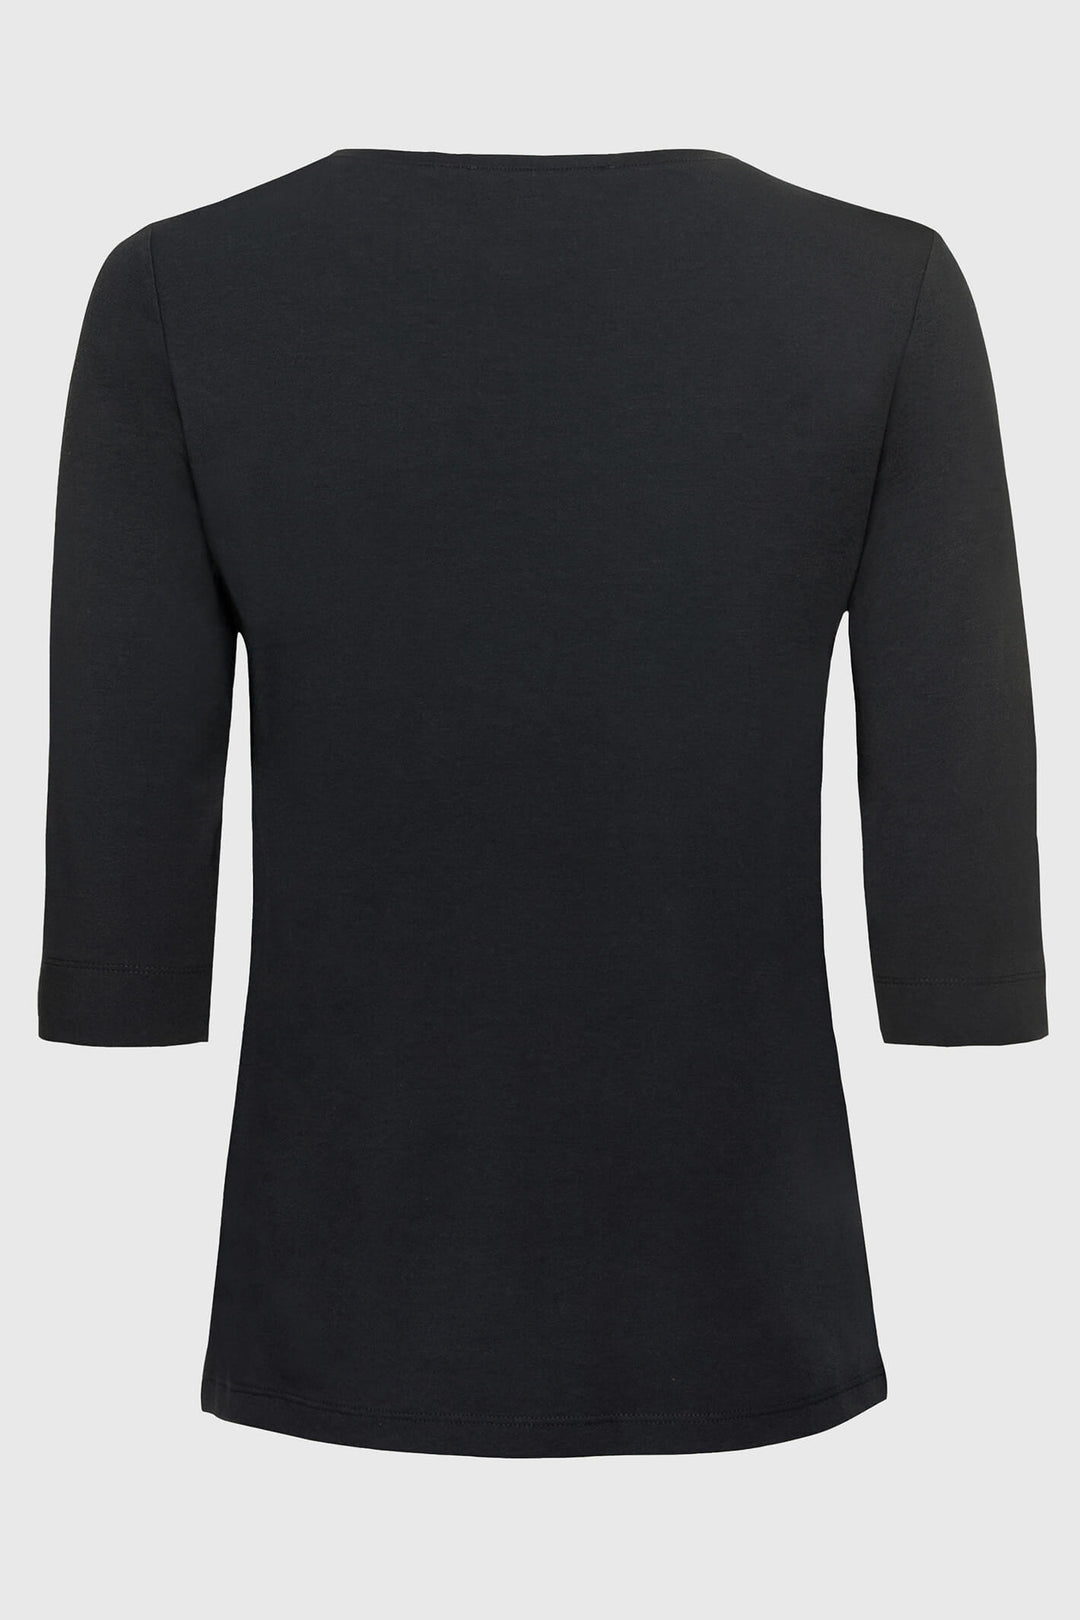 Bianca 6235 Diella Black Three-Quarter Sleeve T-Shirt - Dotique